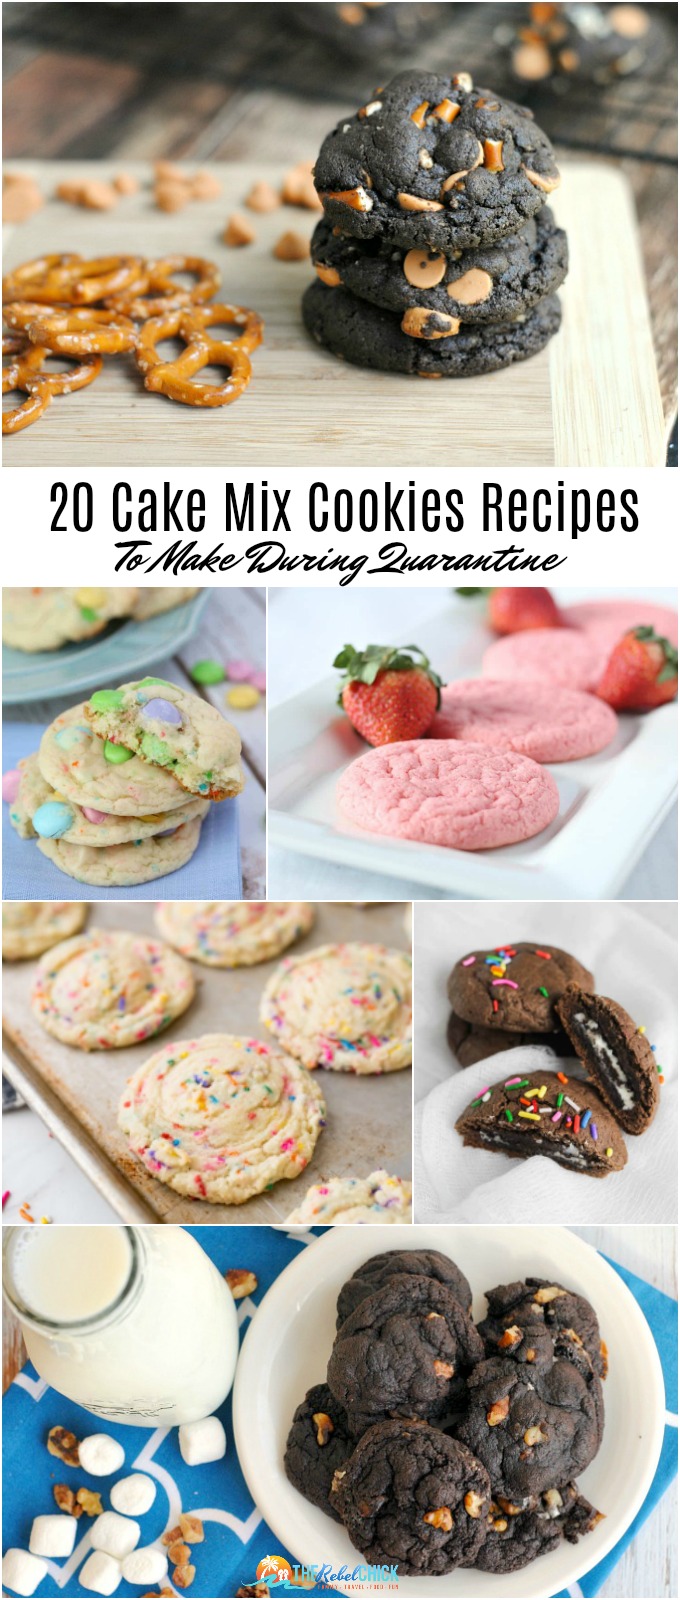 20 Cake Mix Cookies Recipes